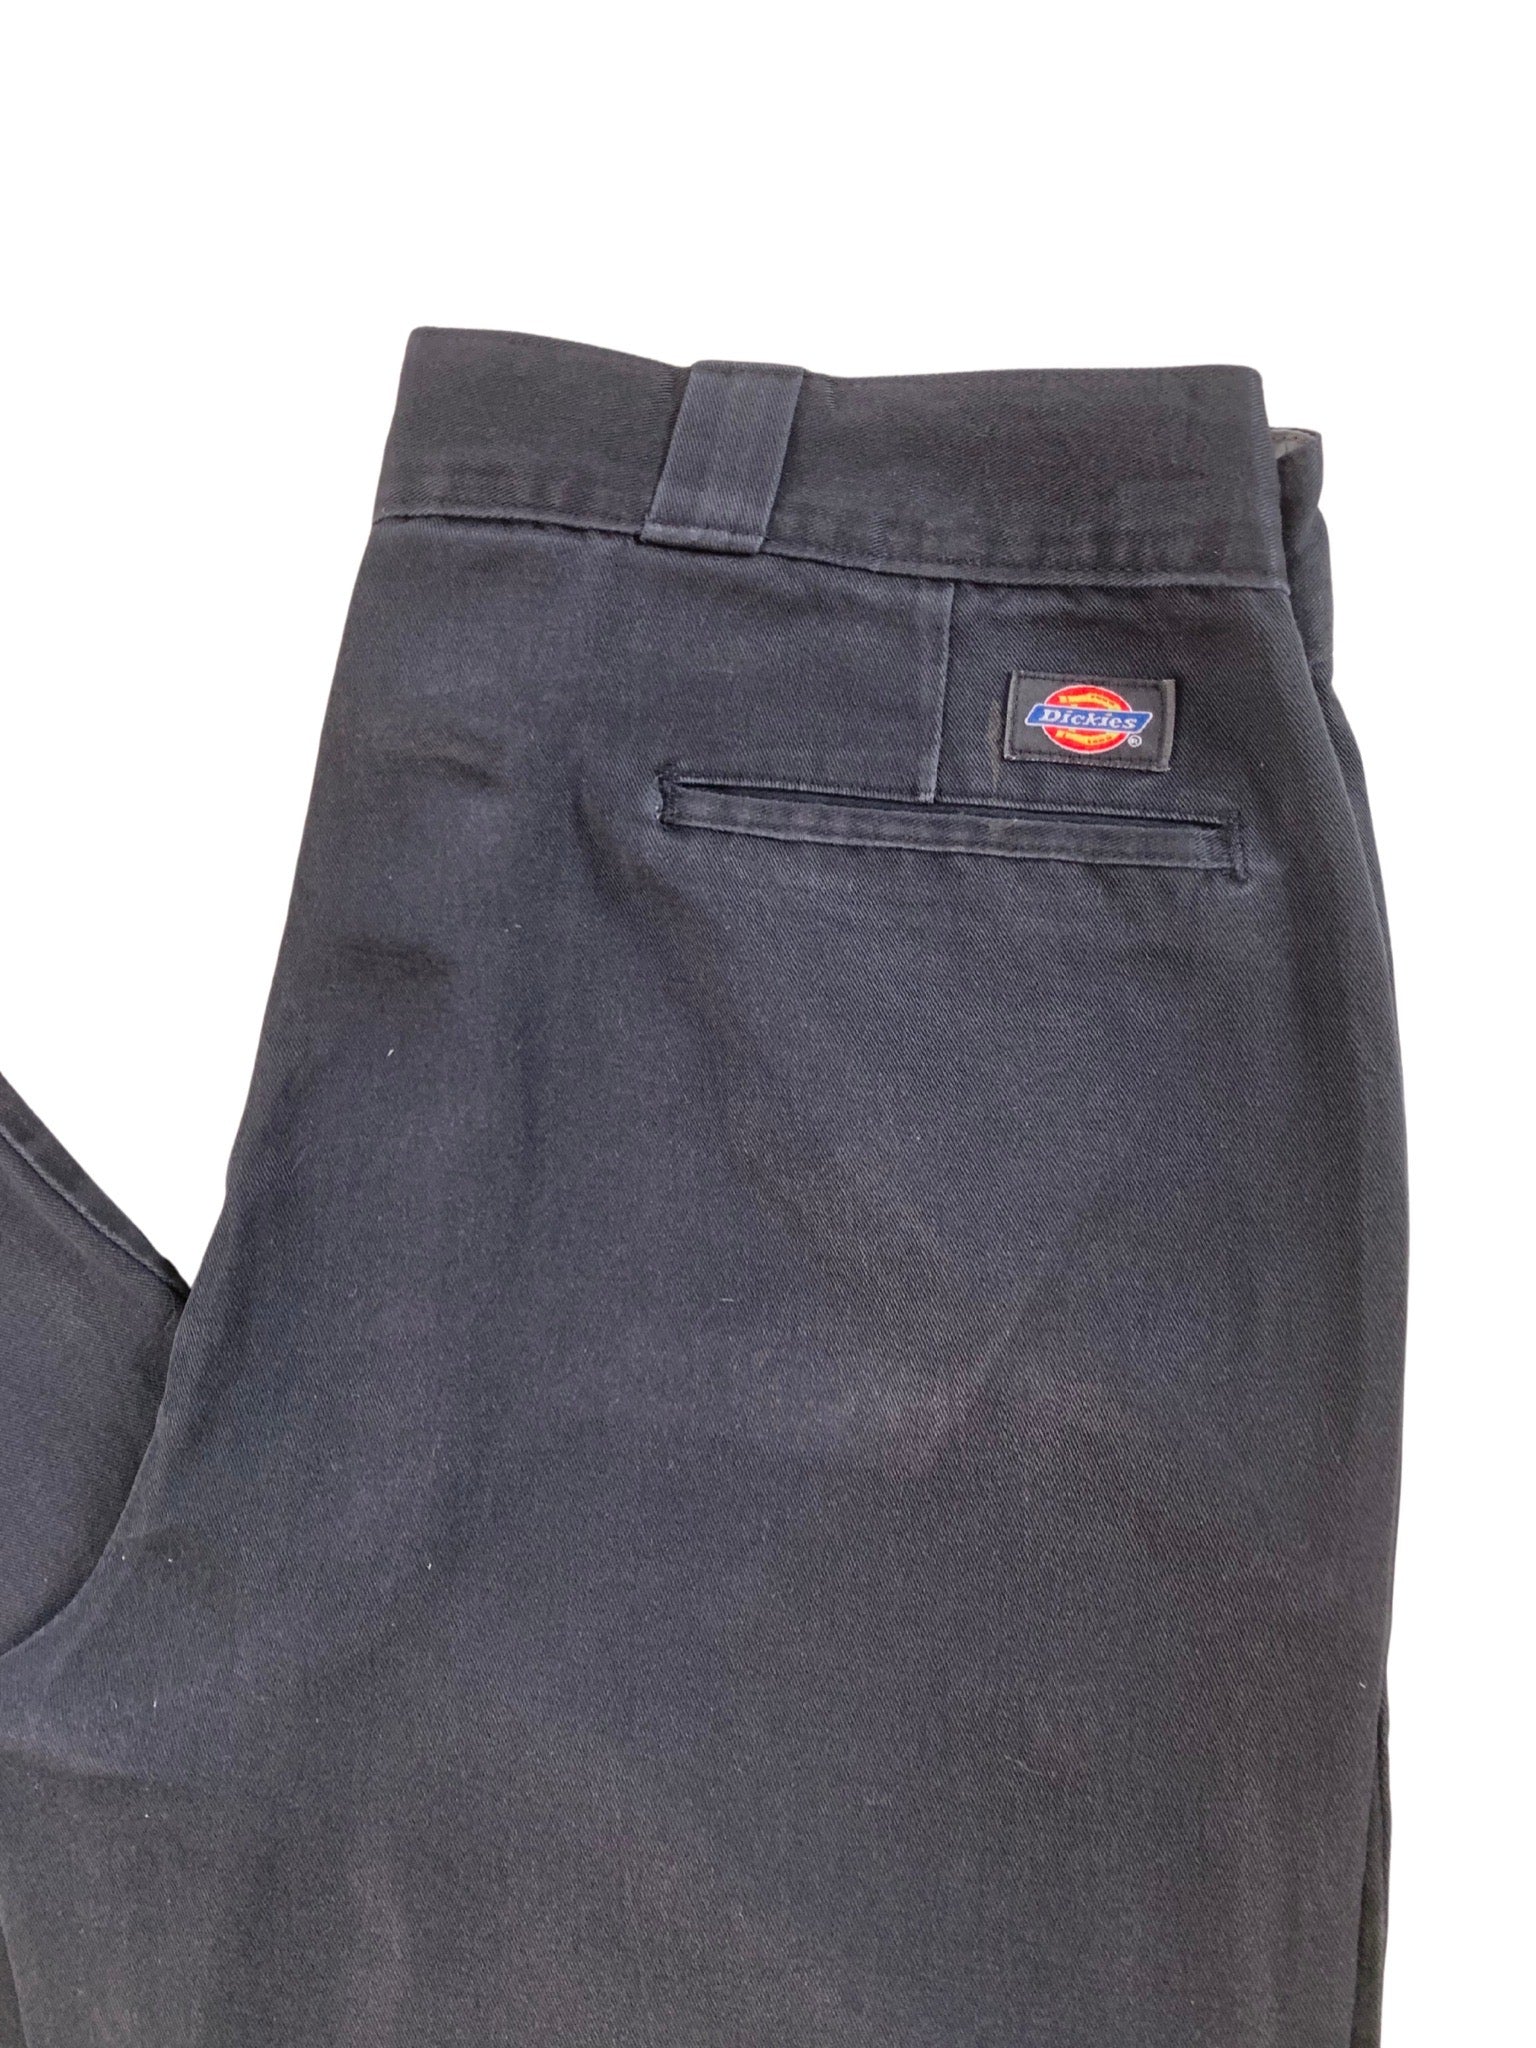 1x Vintage DICKIES Black Straight Leg Trousers - Waist 36 - Length 32 - Vintage Superstore Online